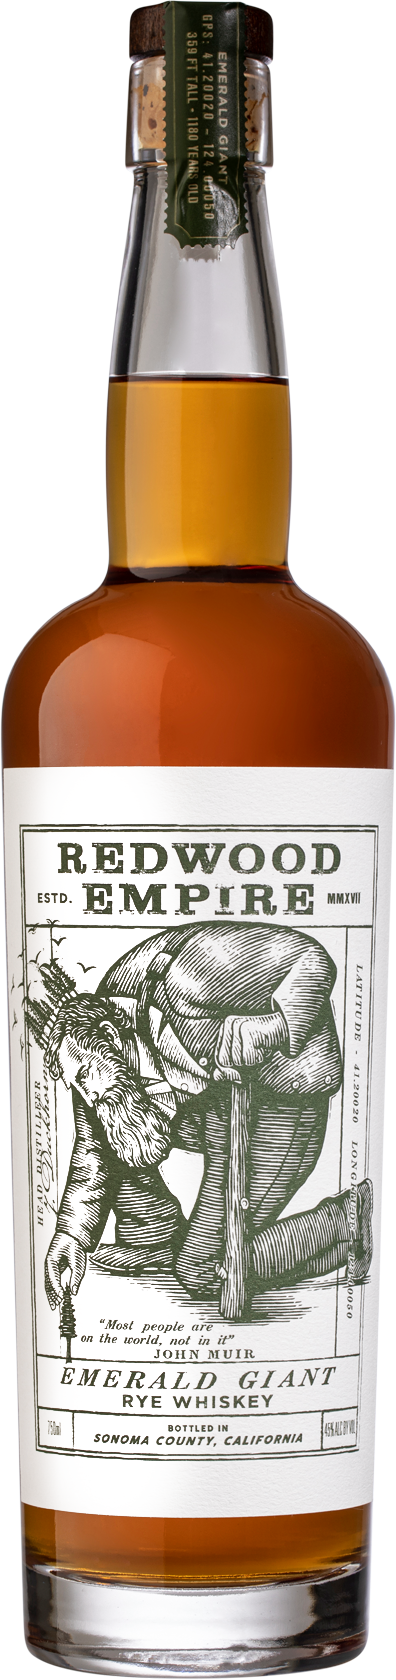 Redwood Empire Emerald Giant Rye Whiskey 750ML SG